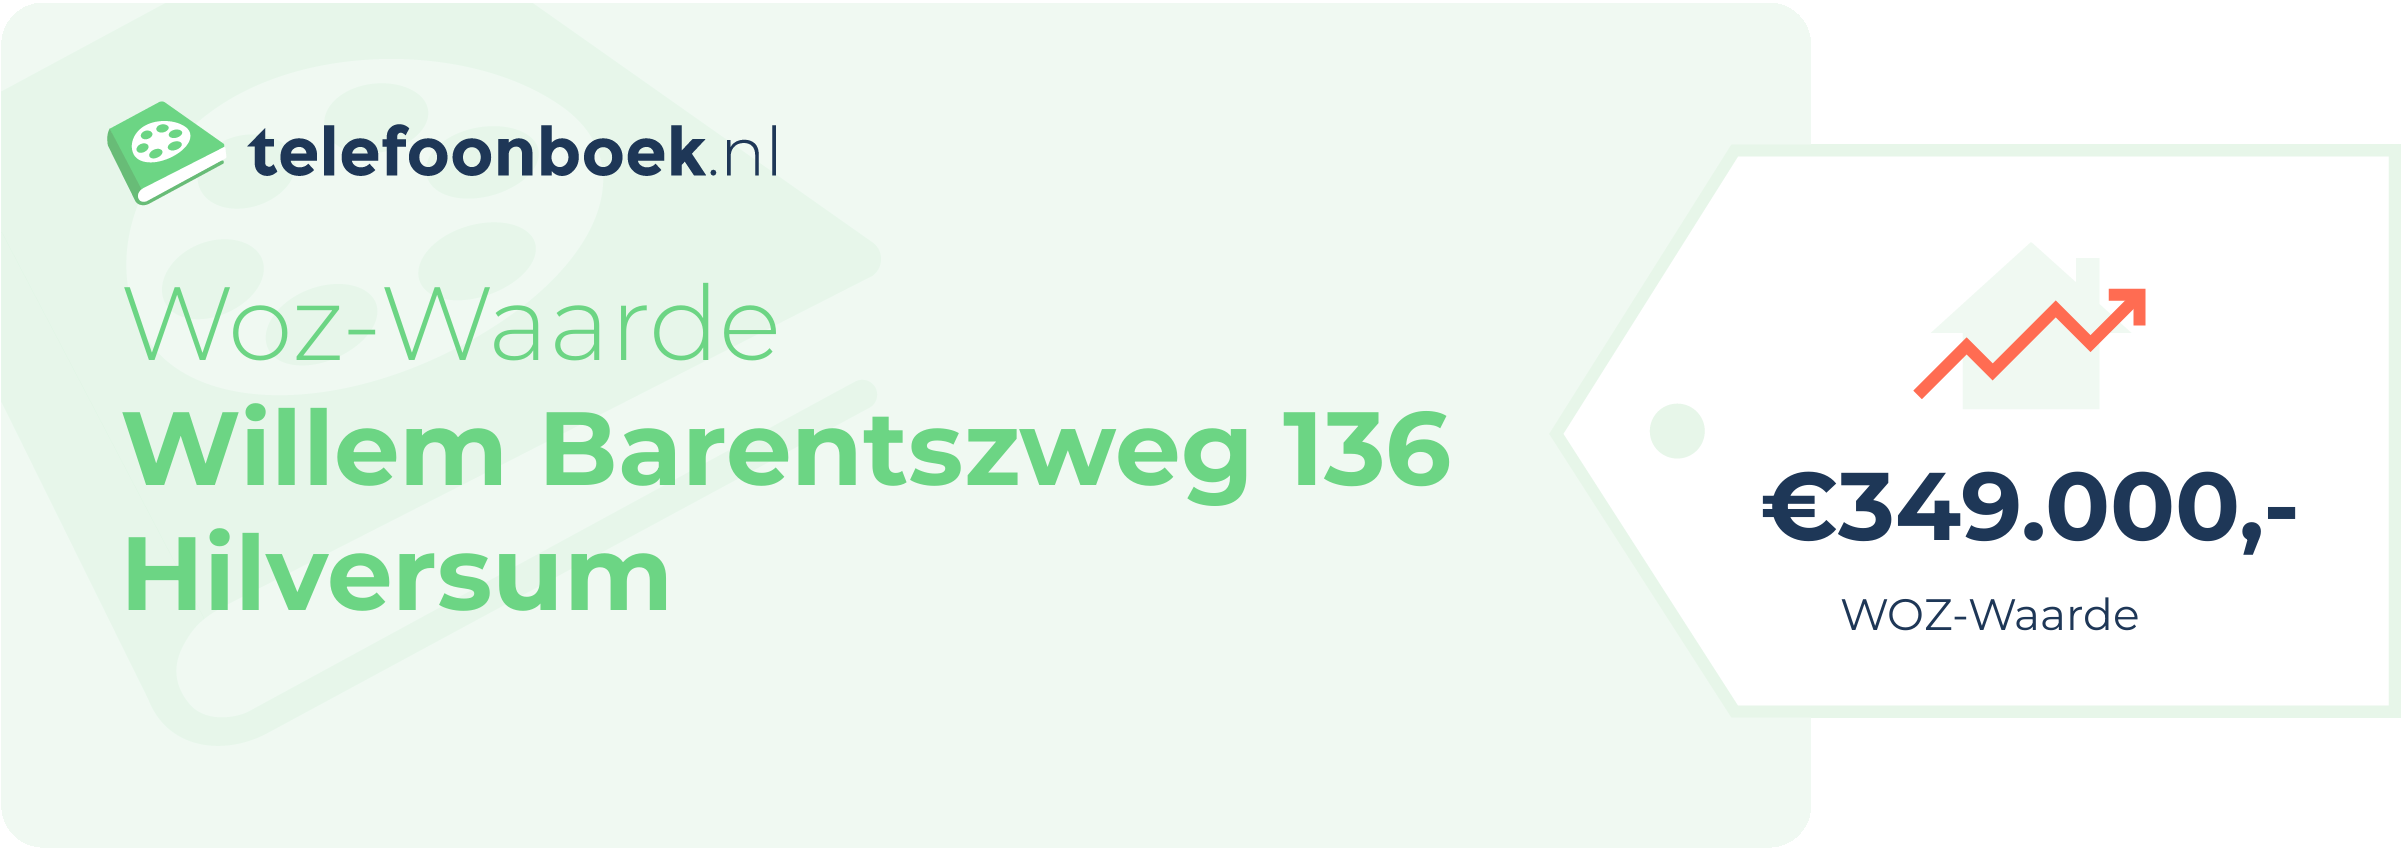 WOZ-waarde Willem Barentszweg 136 Hilversum